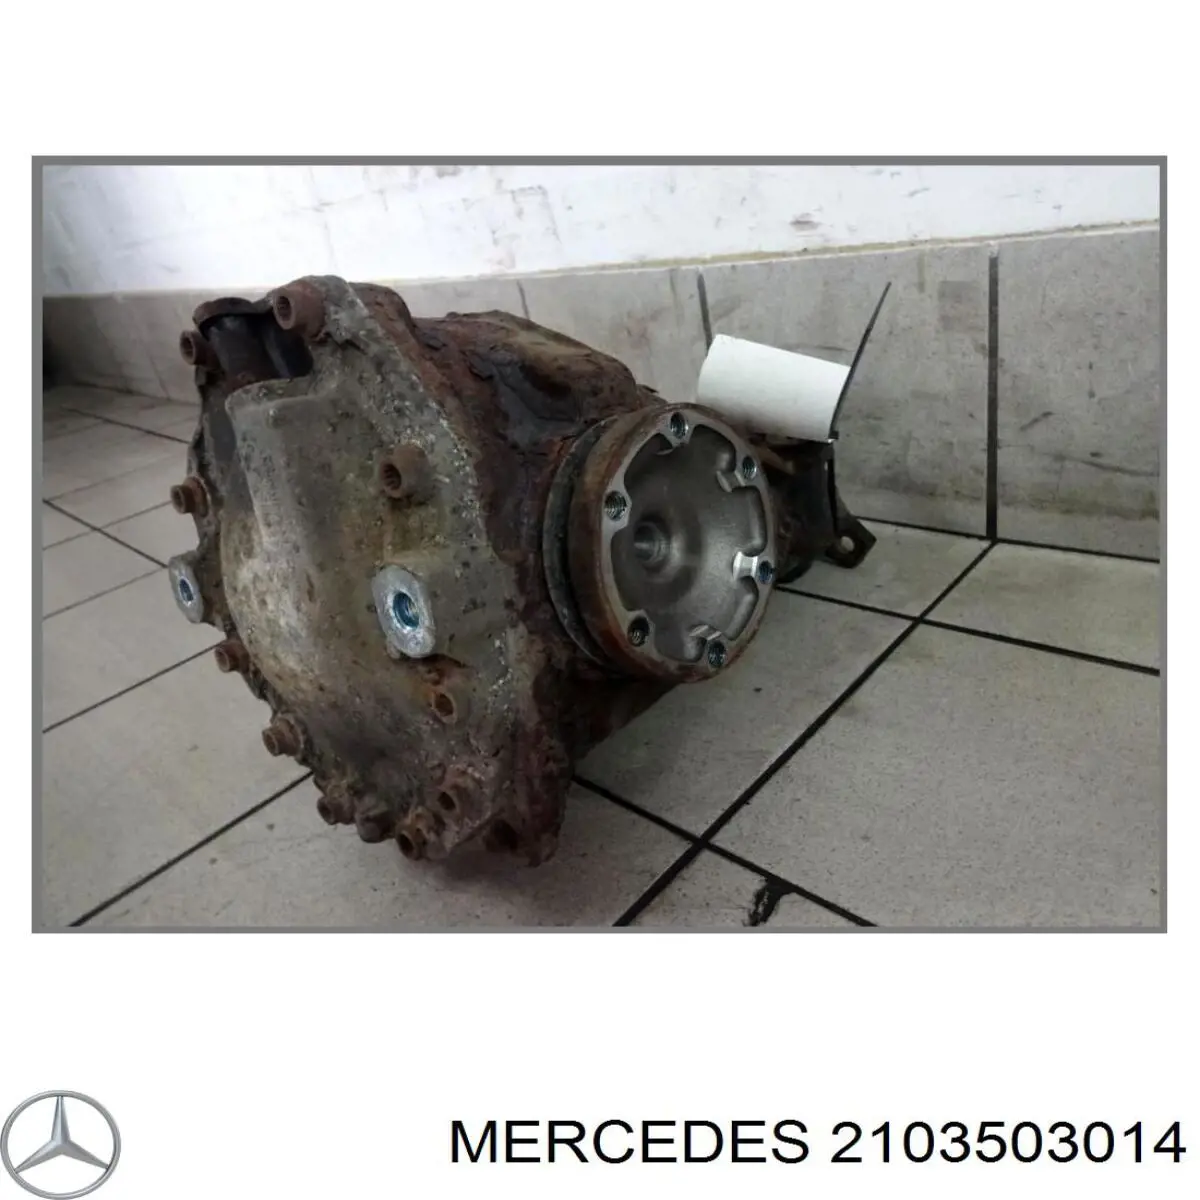 2103503014 Mercedes diferencial eje trasero